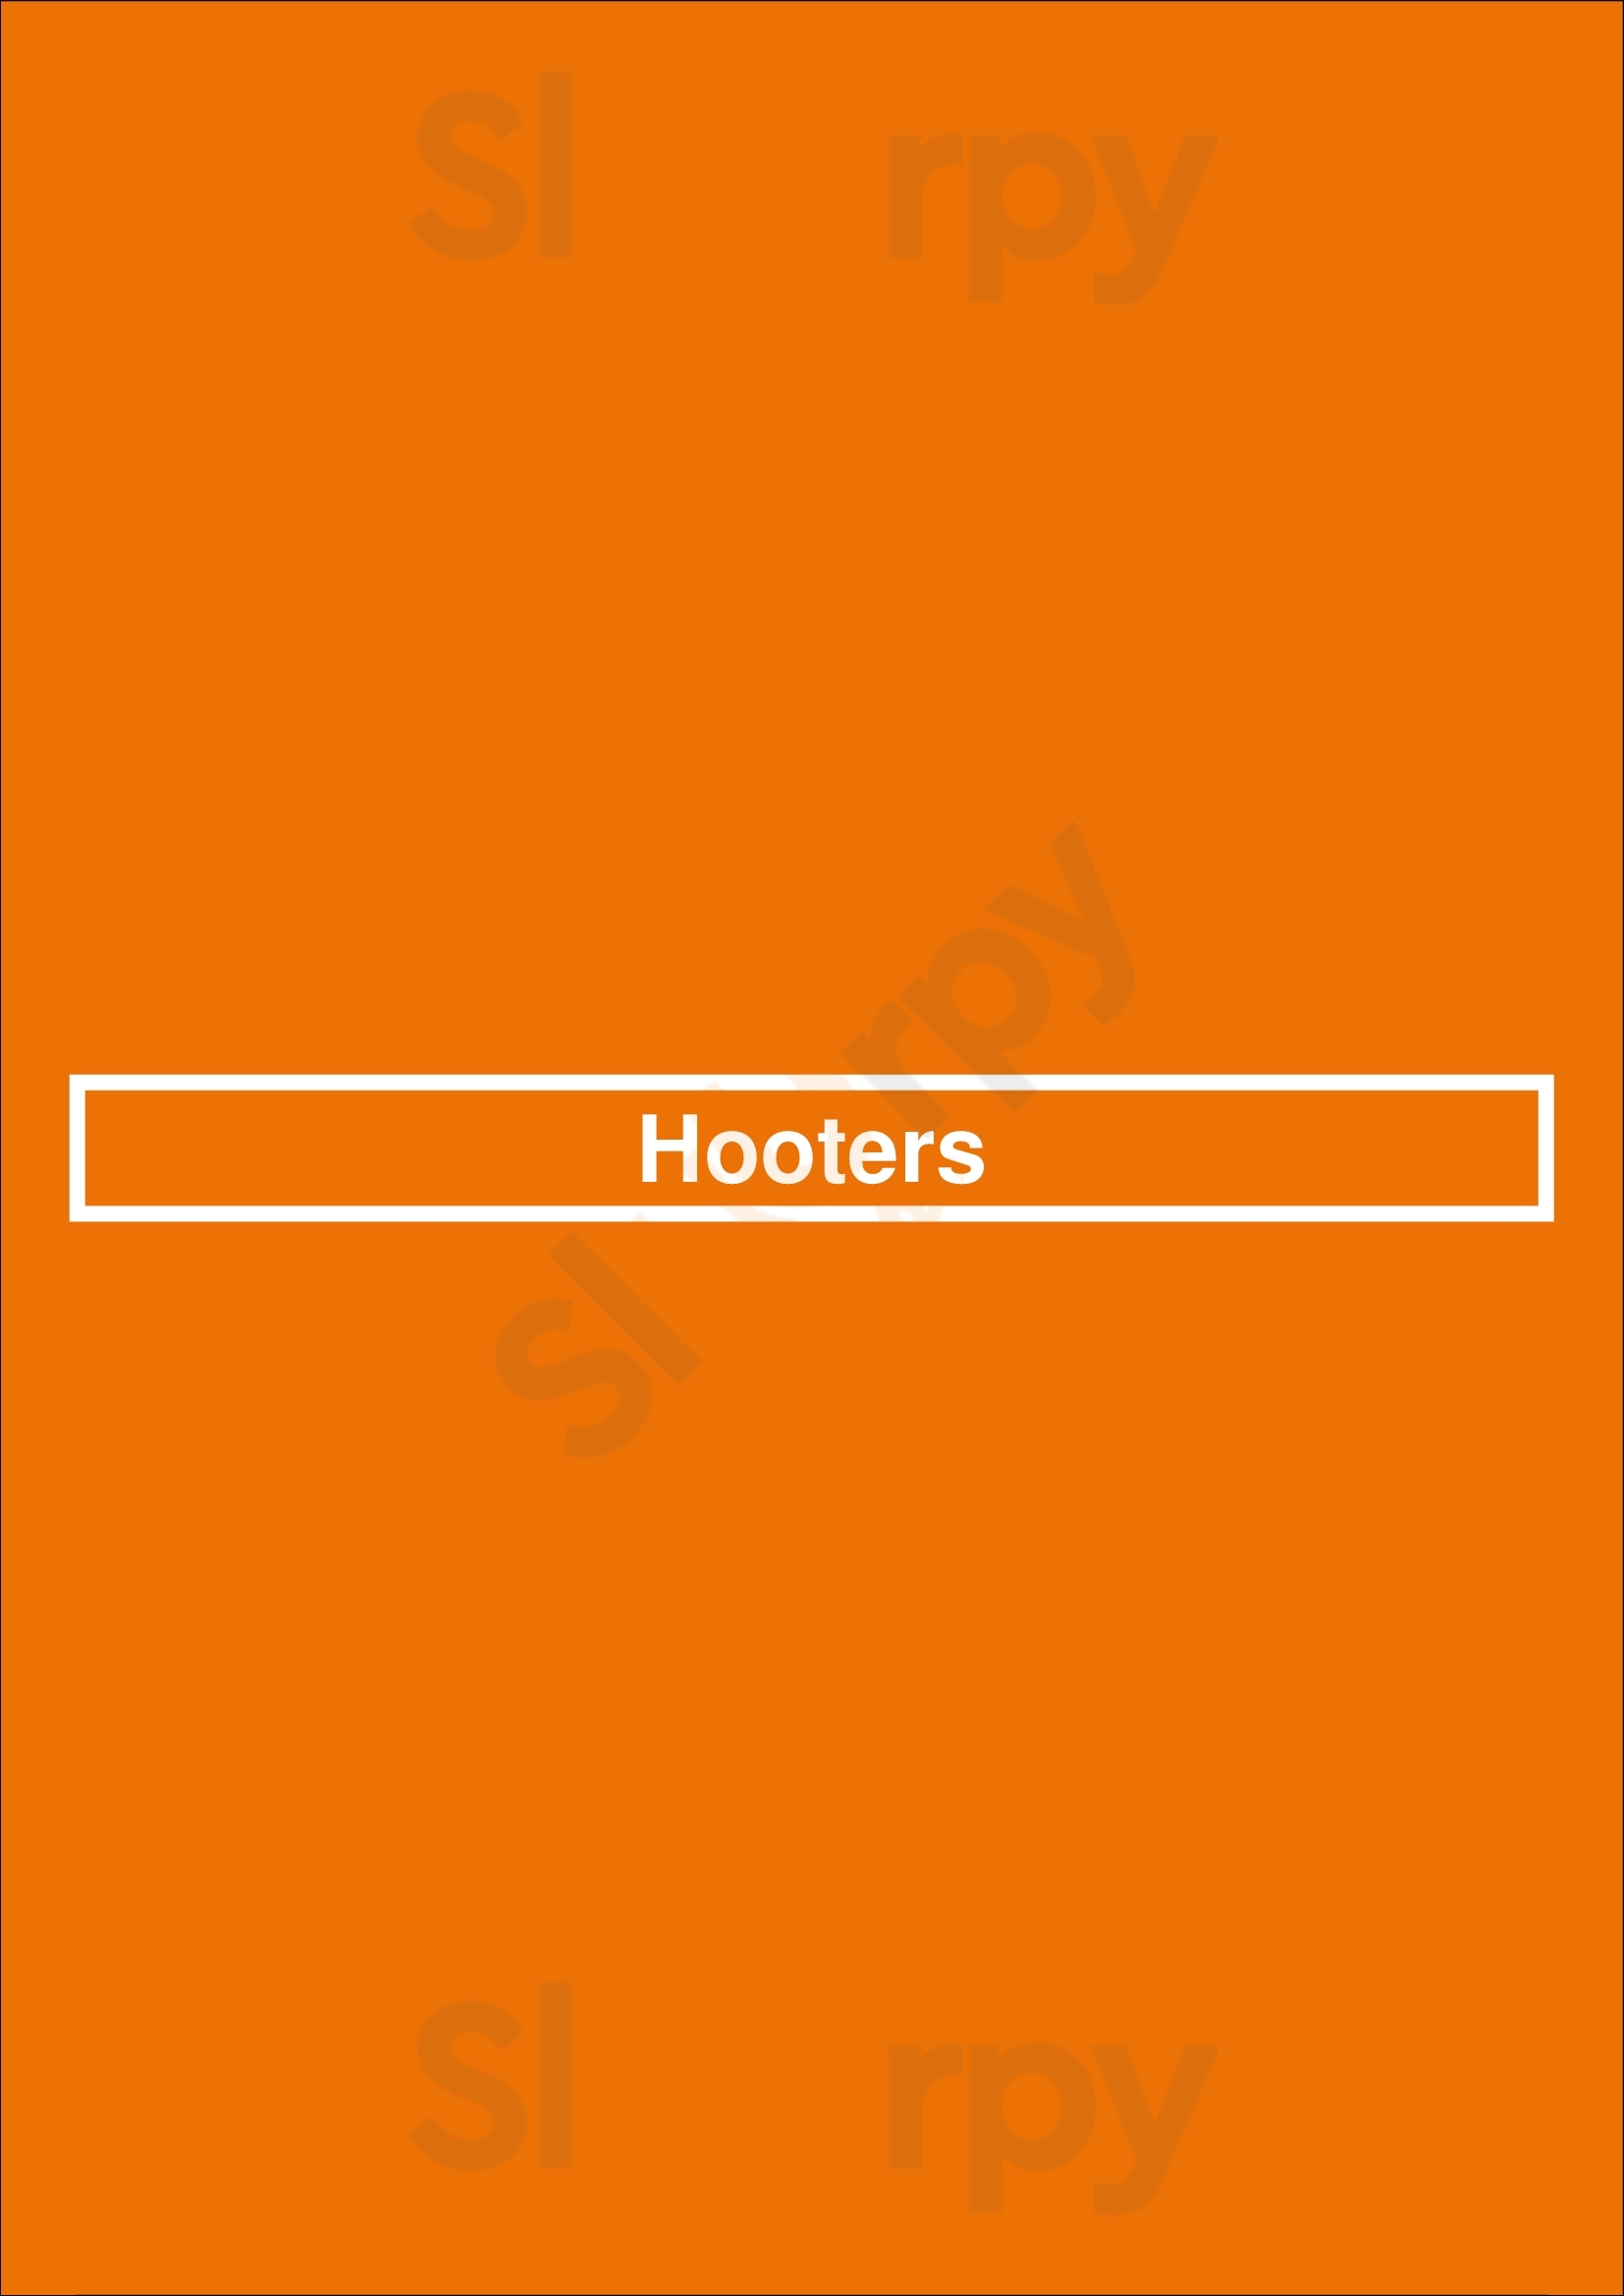 Hooters Portage Menu - 1